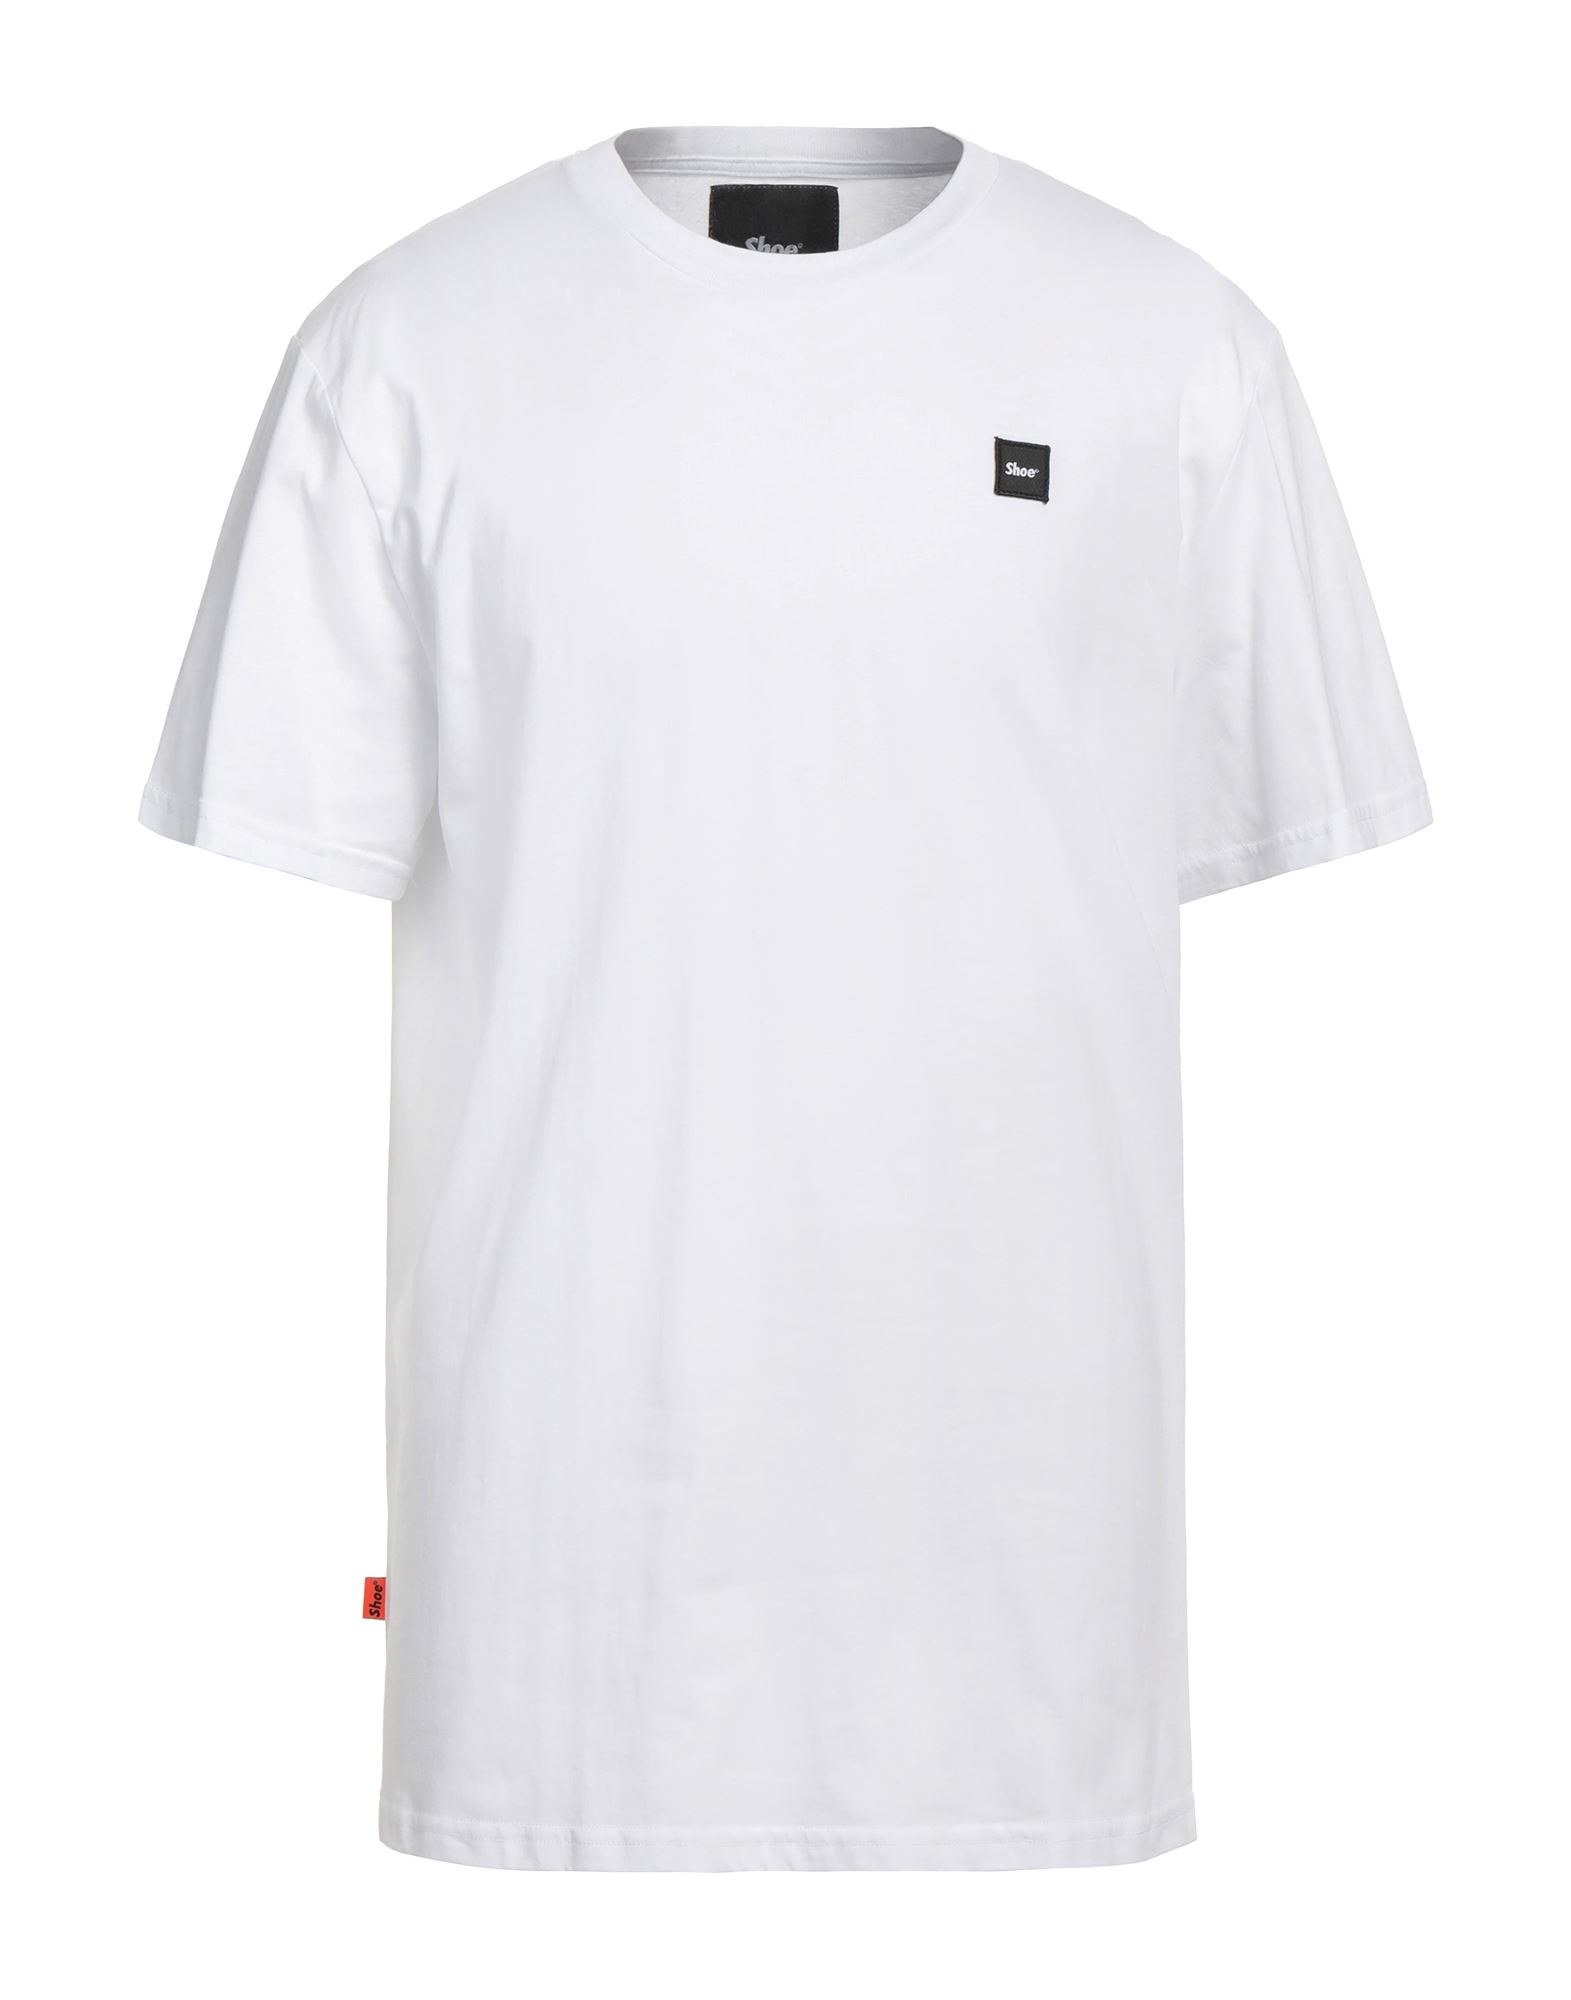 Shoe® Shoe Man T-shirt White Size S Cotton